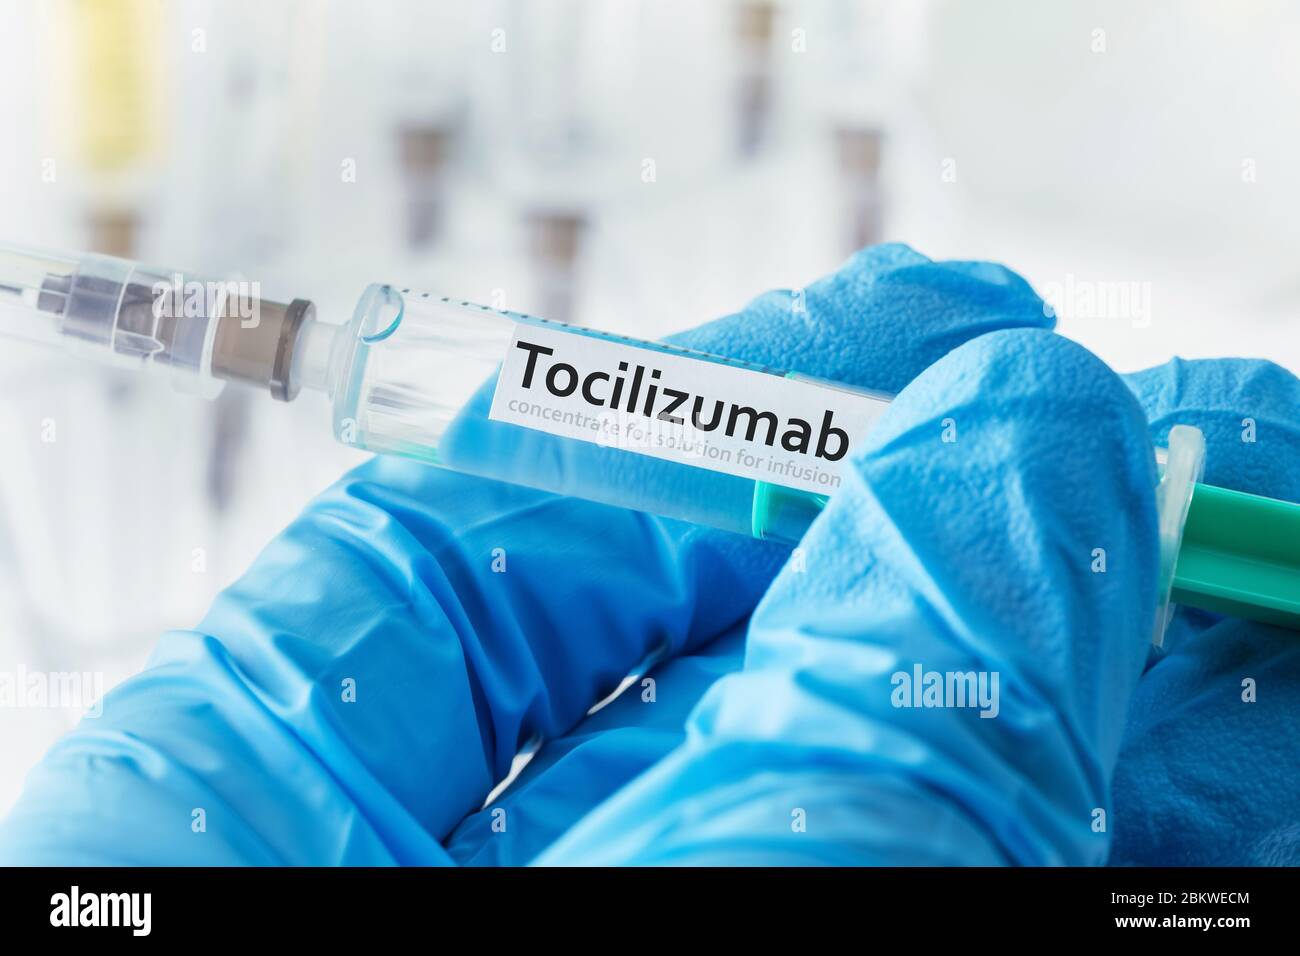 tocilizumab medicine concentrate syringe Stock Photo